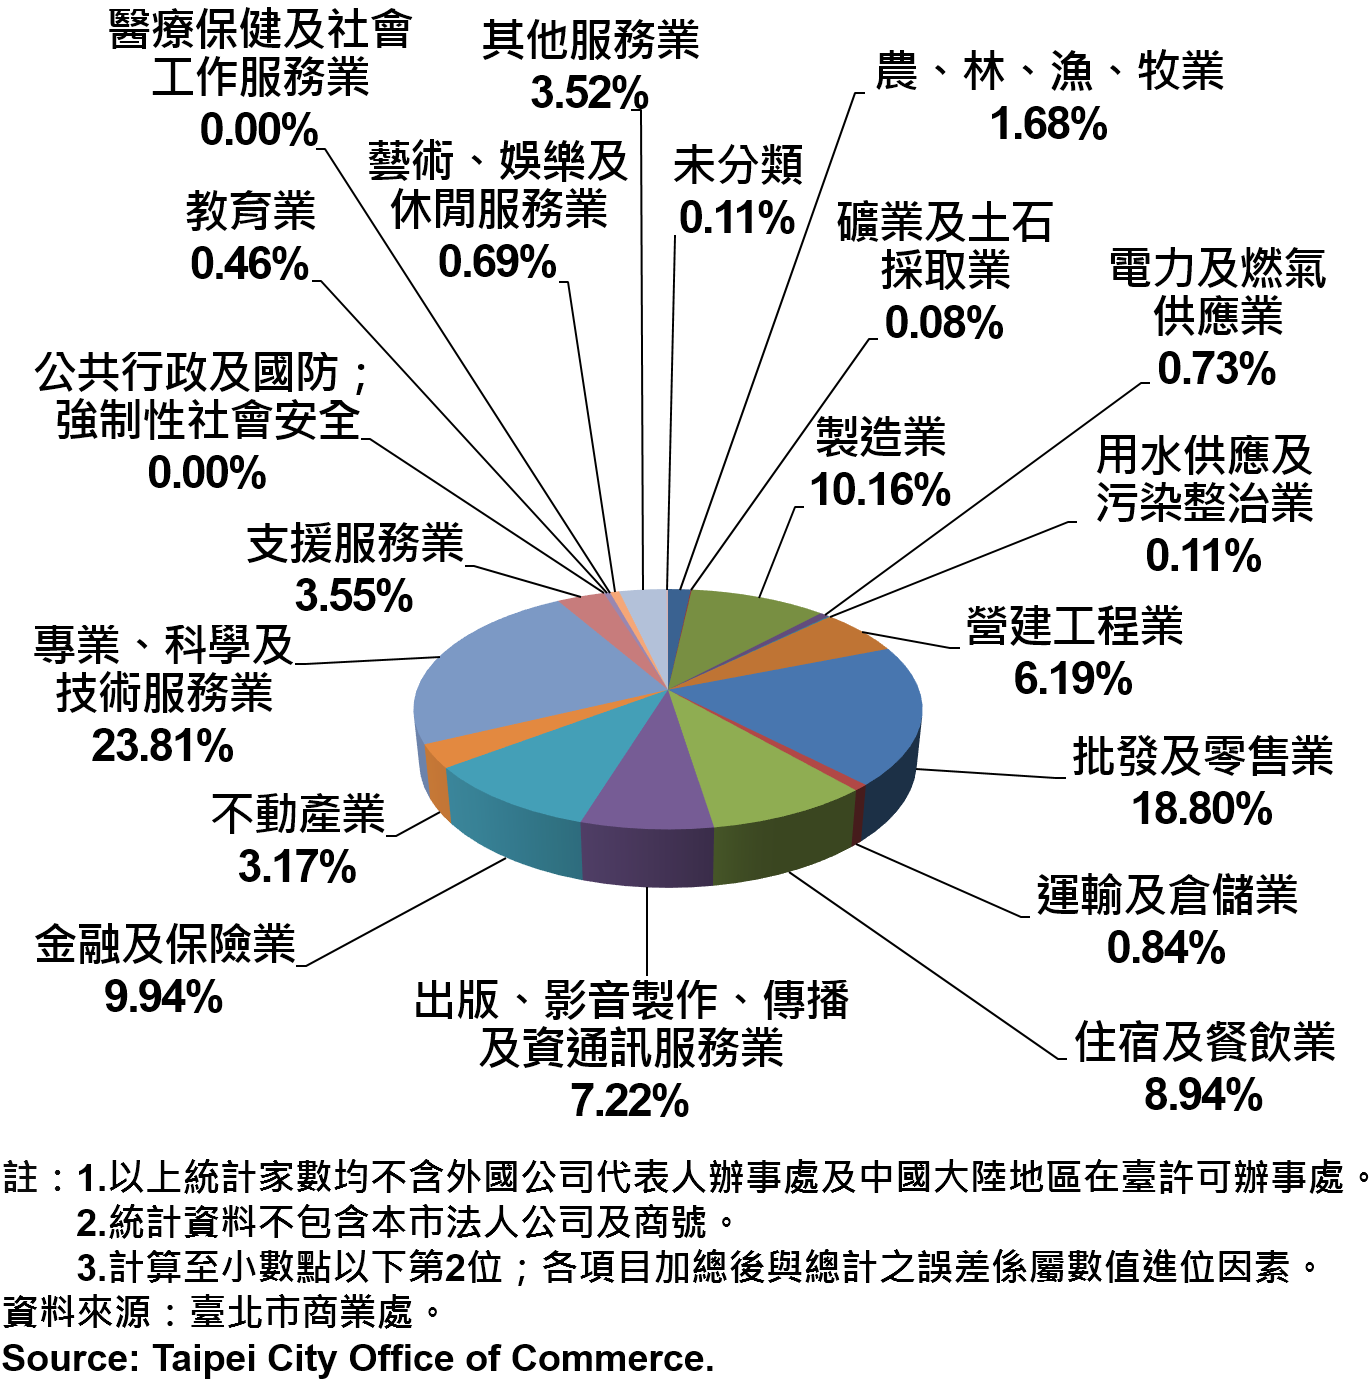 臺北市新創公司行號之業別分布情形—依新增家數—2018Q2 Newly Registered Companies in Taipei City by Industry- Number of Incorporation—2018Q2